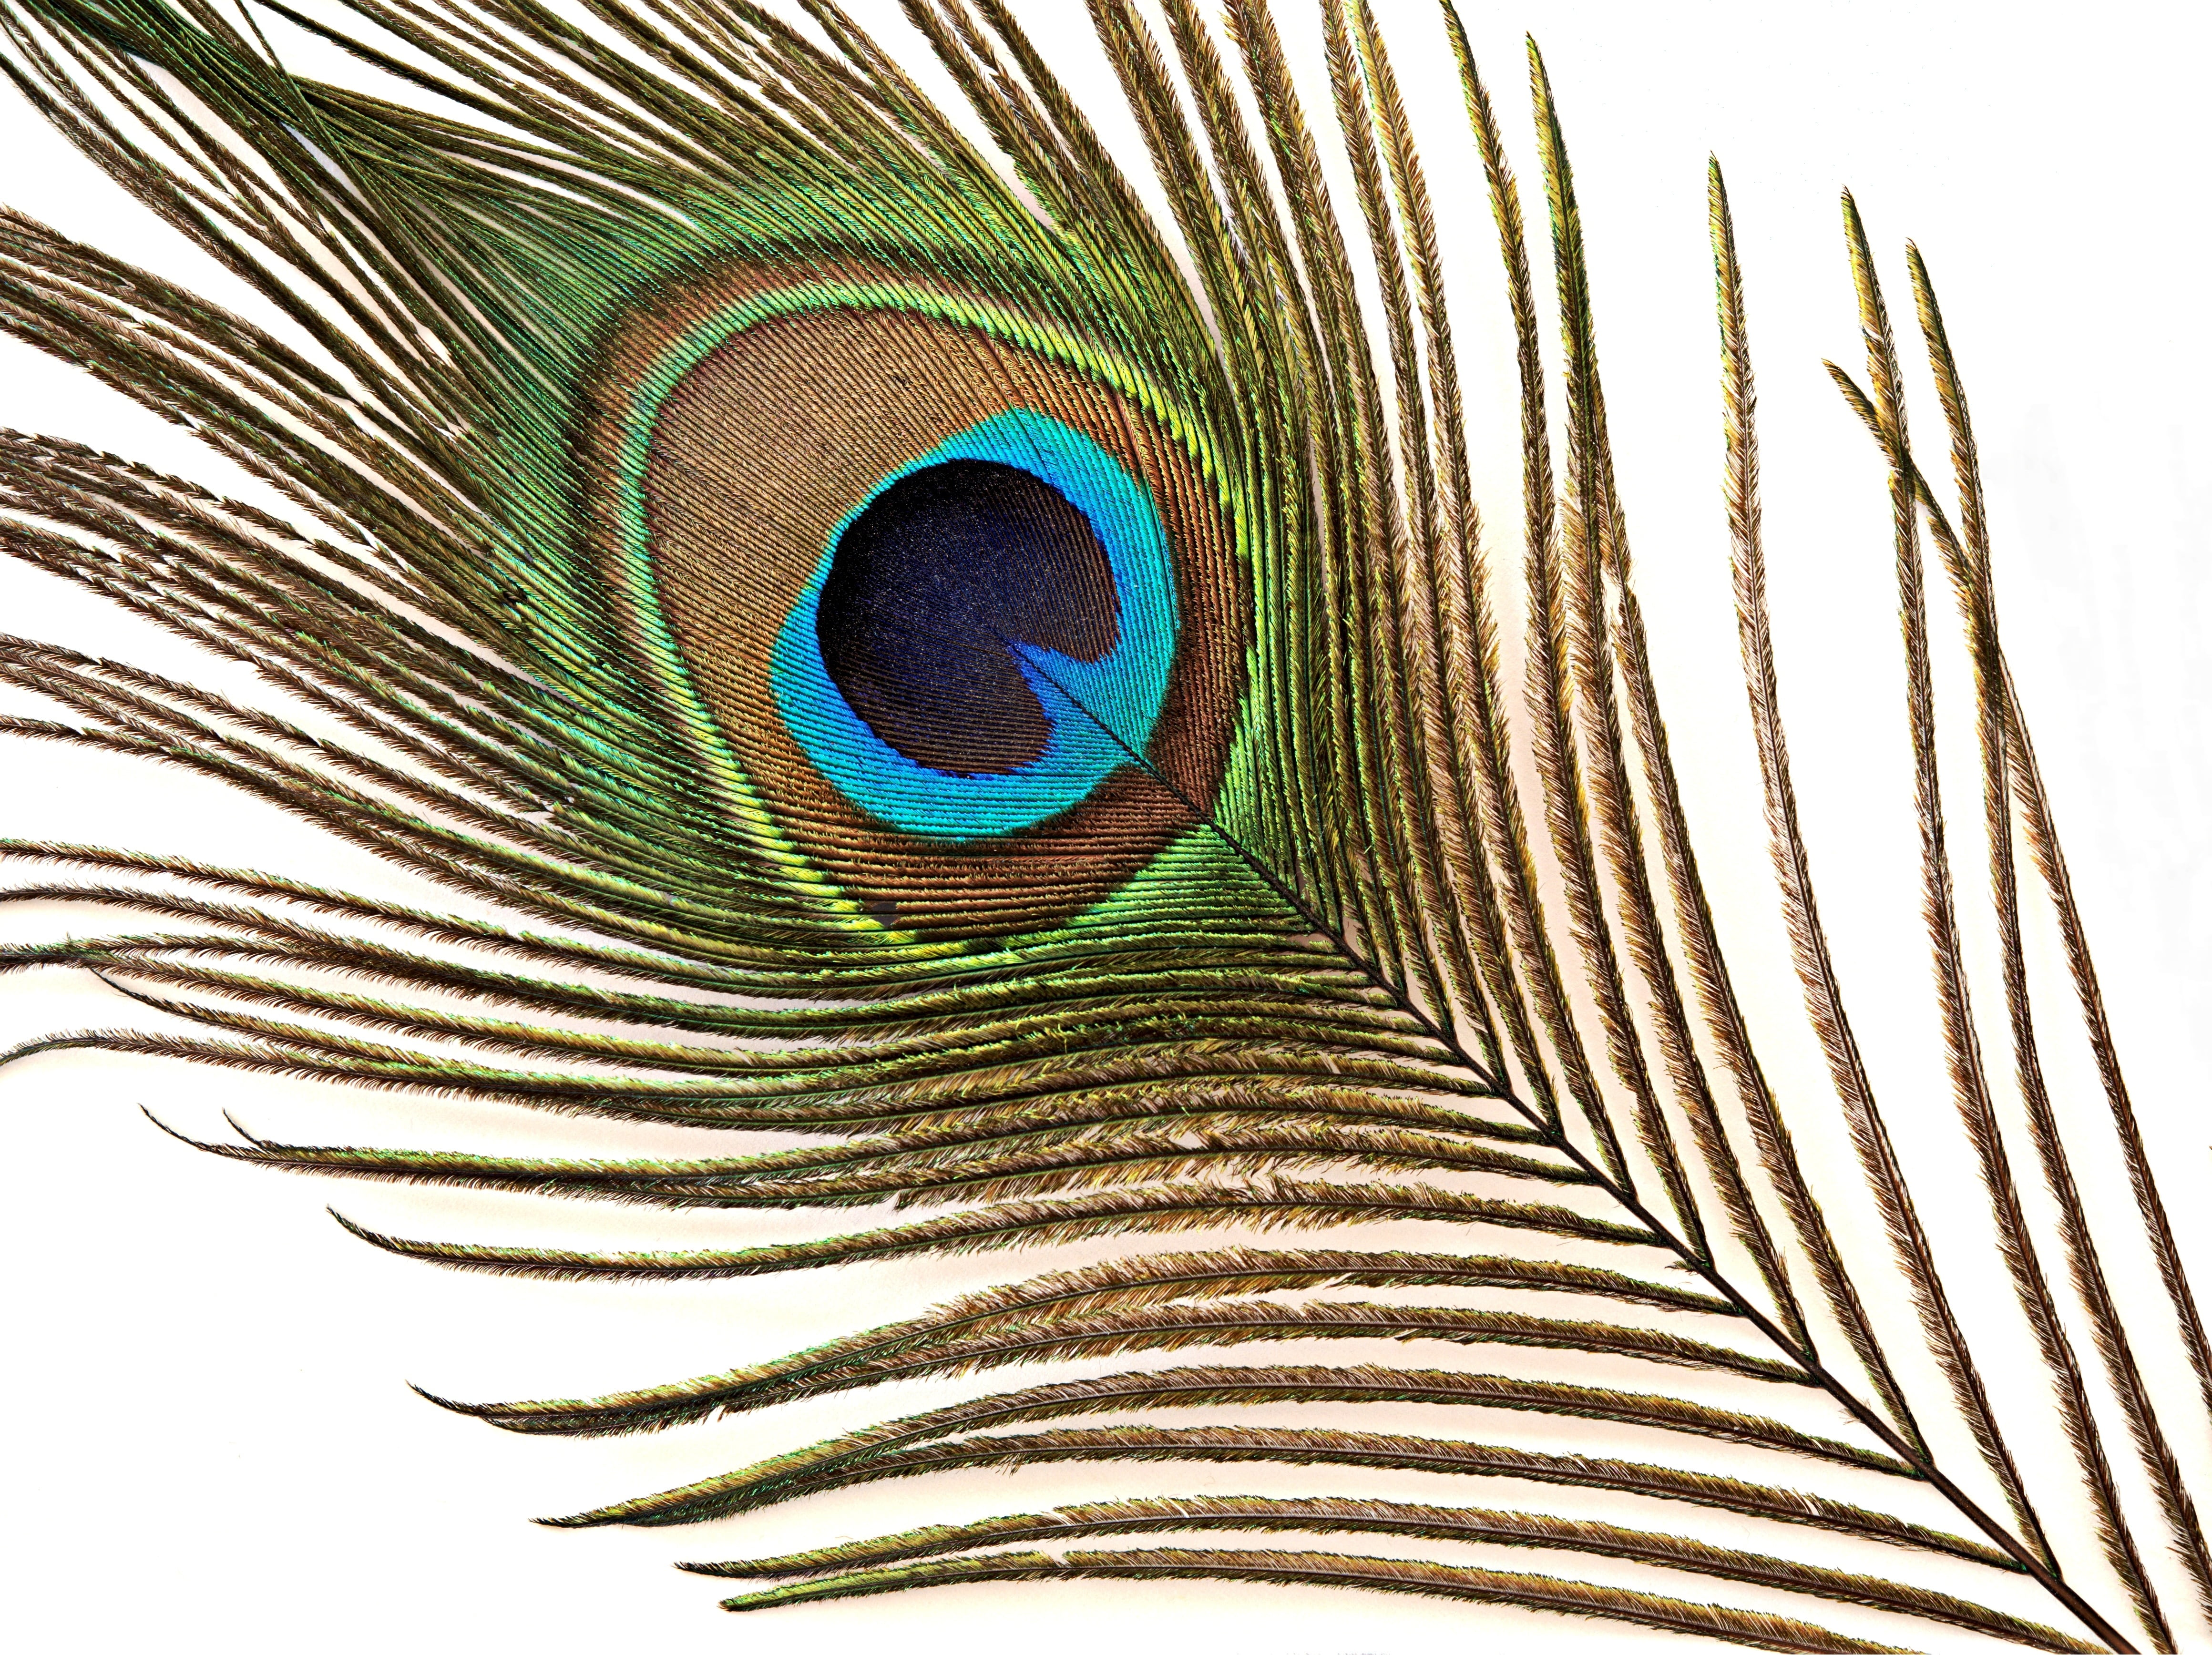 eyespot in a peacock feather